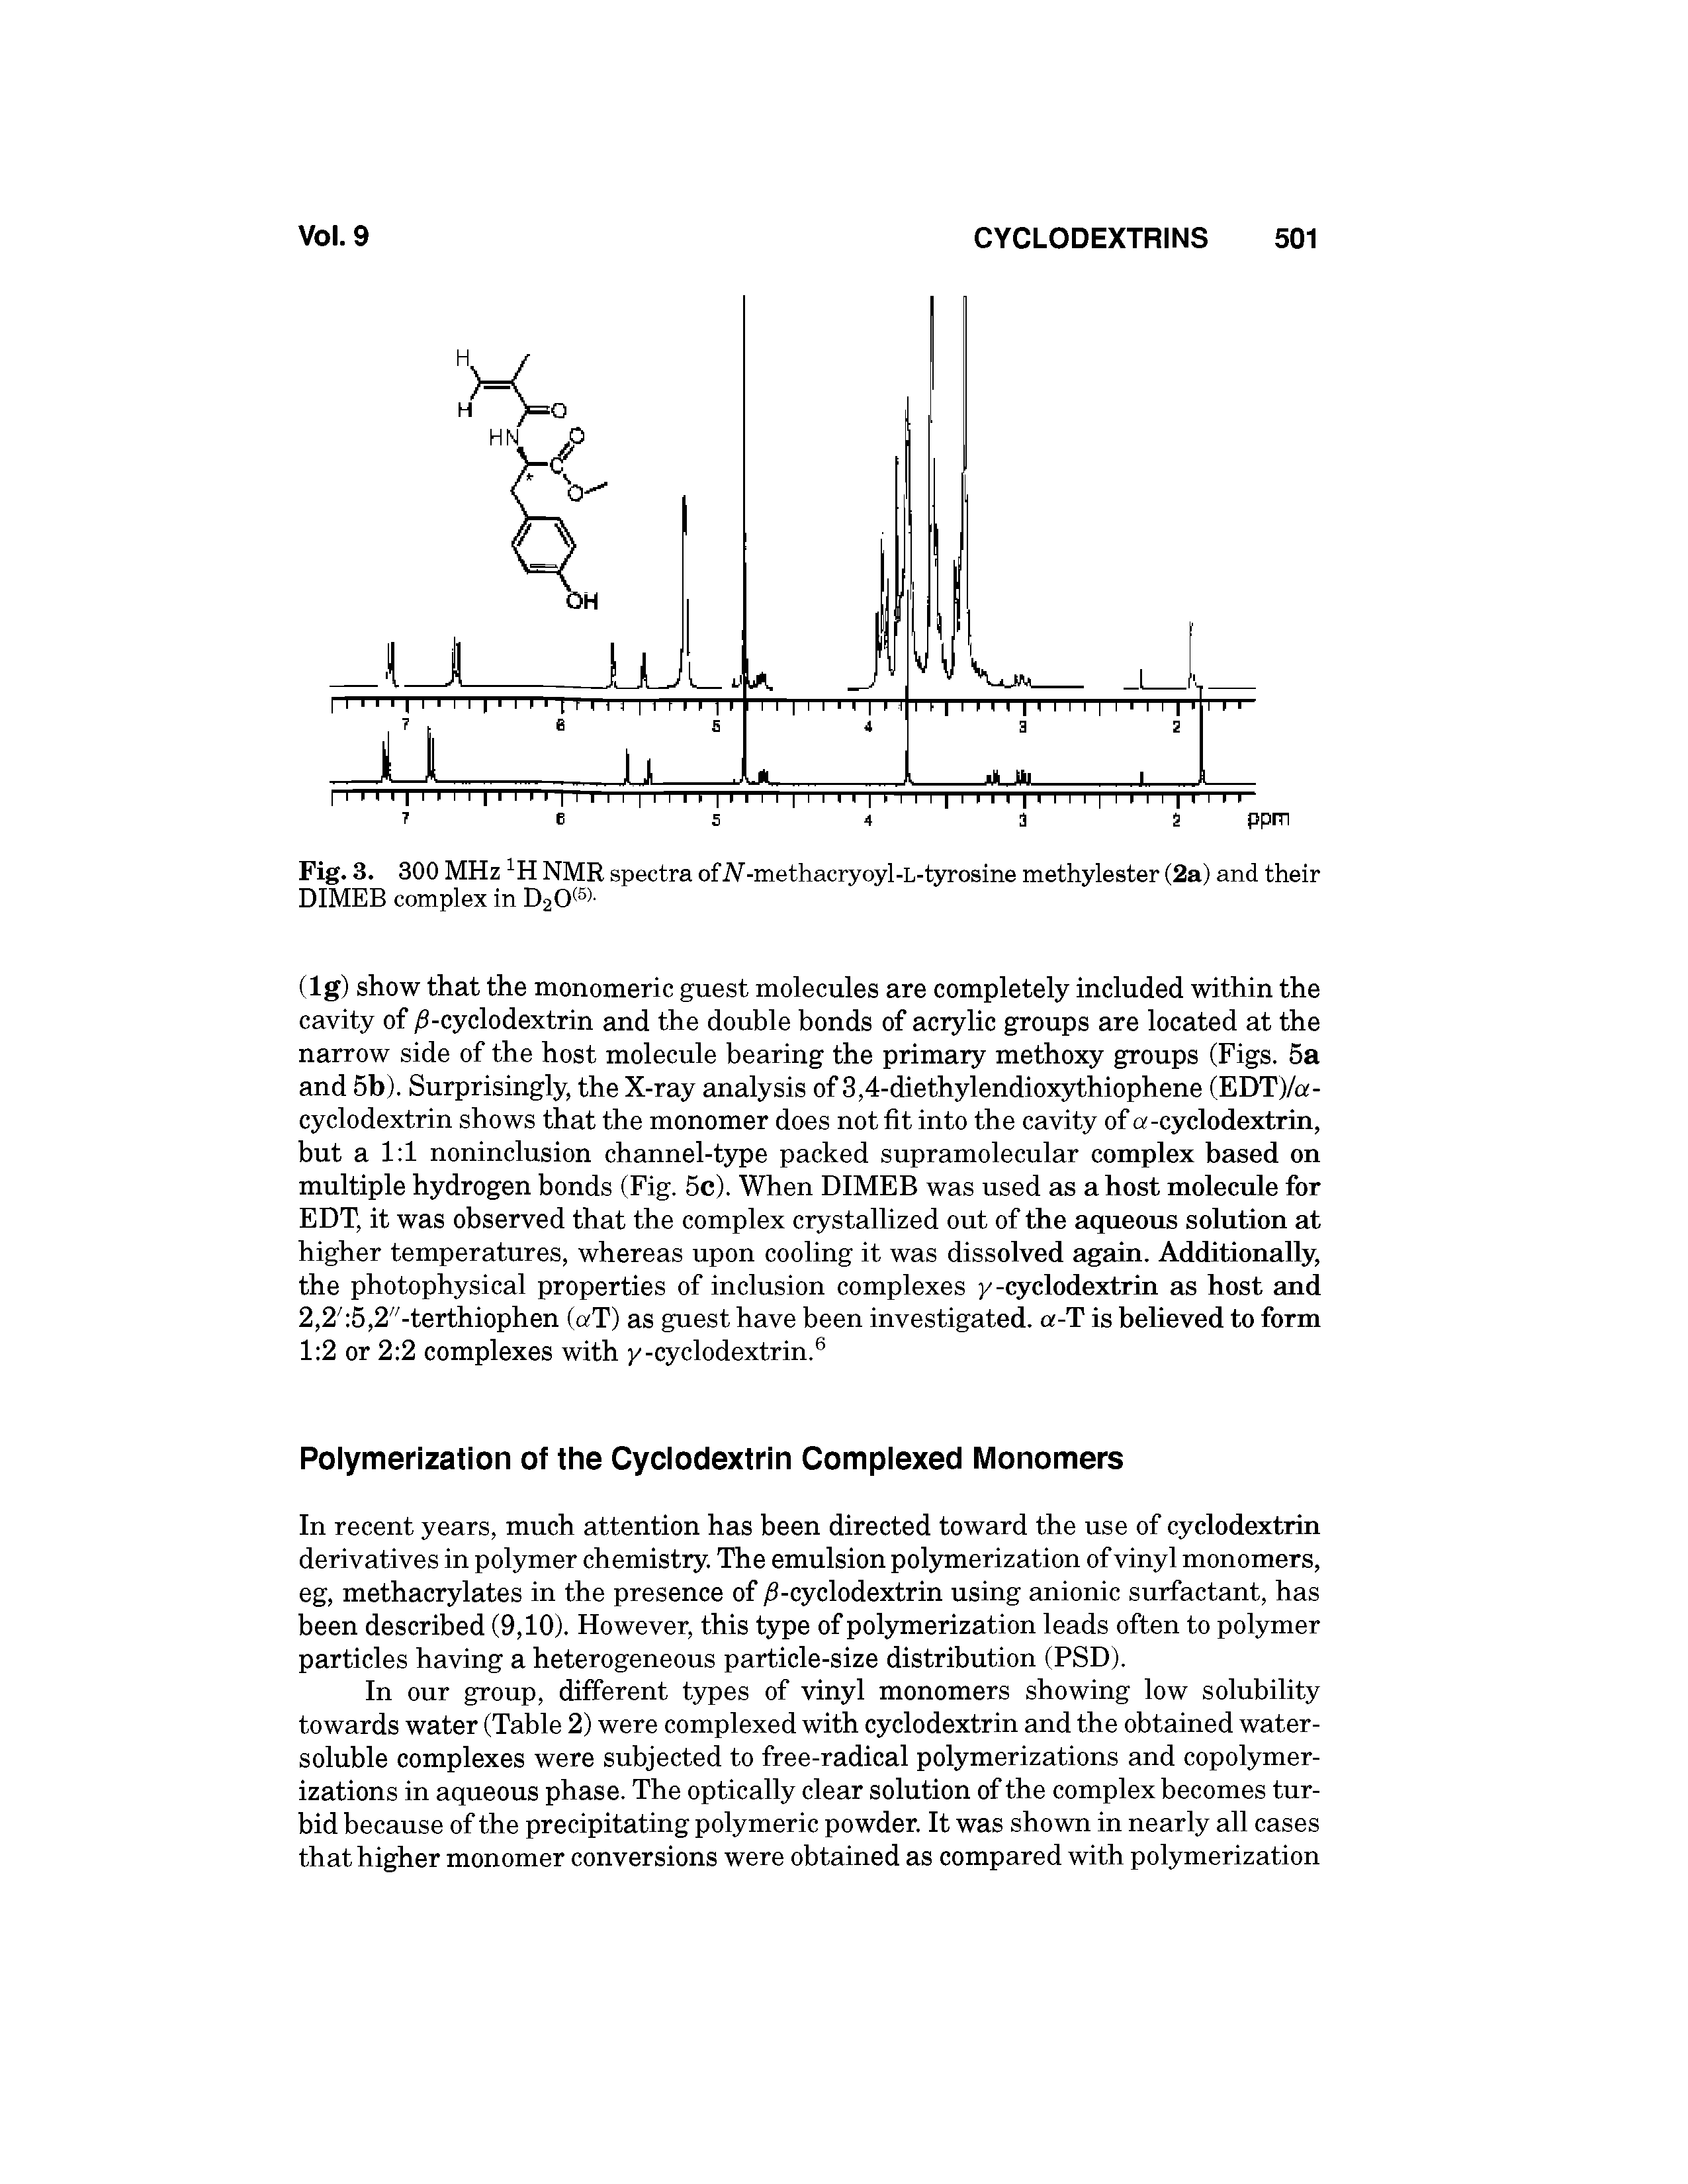 Fig. 3. 300 MHz NMR spectra of A -methacryoyl-L-tyrosine methylester (2a) and their DIMEB complex in D20 ...